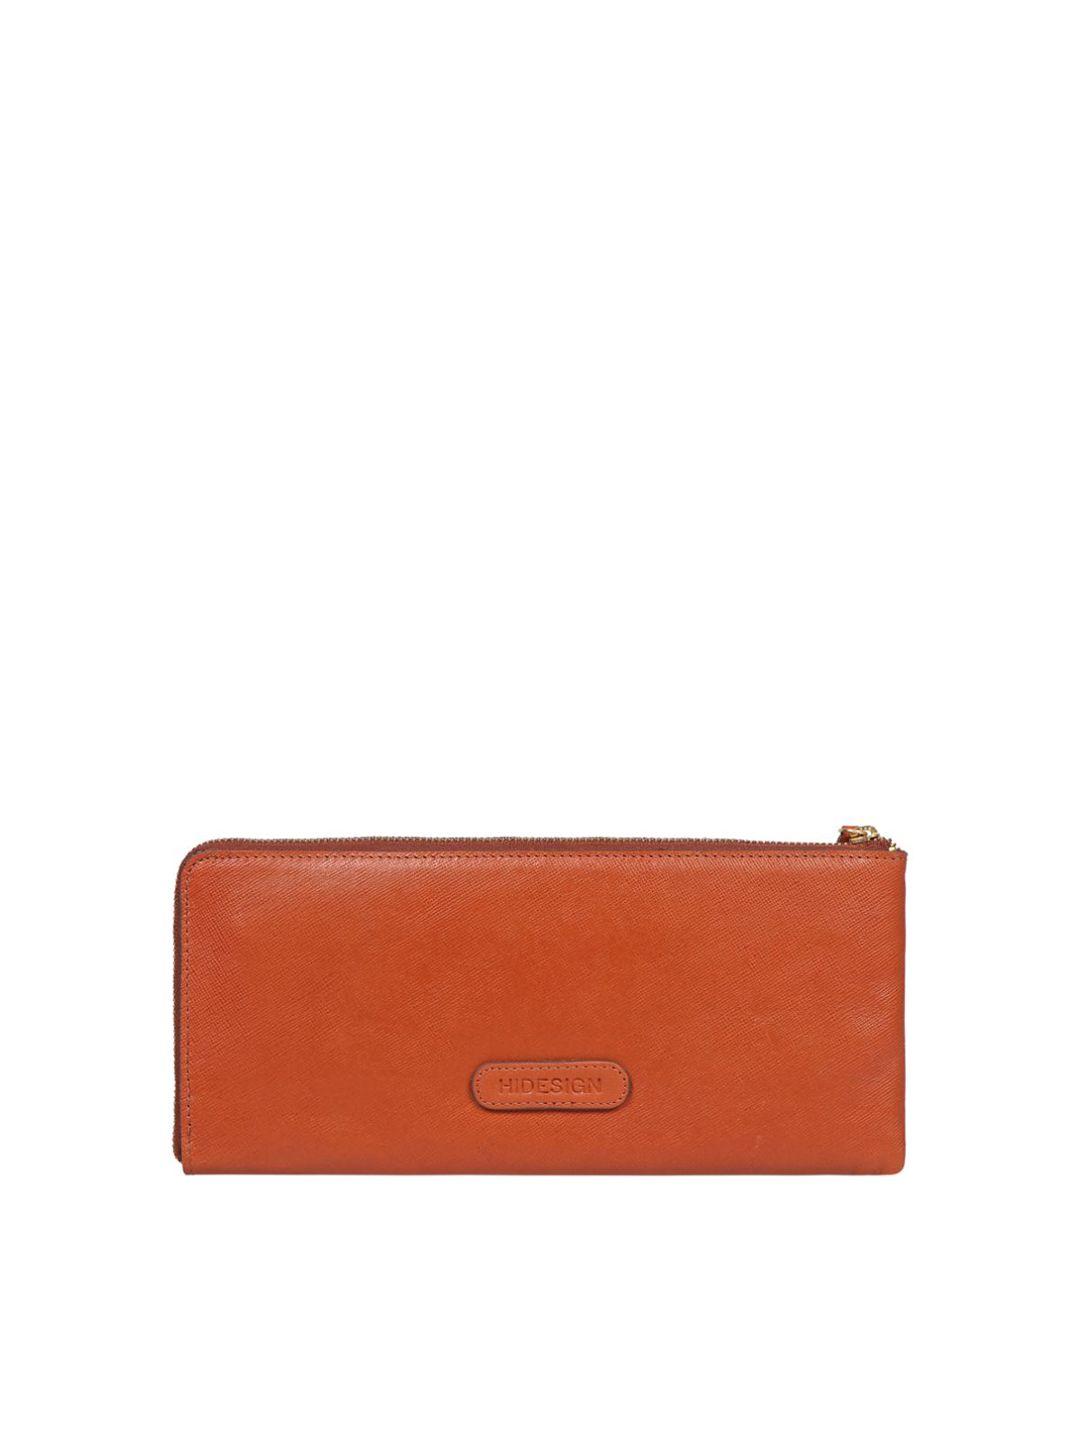 hidesign leather purse clutch